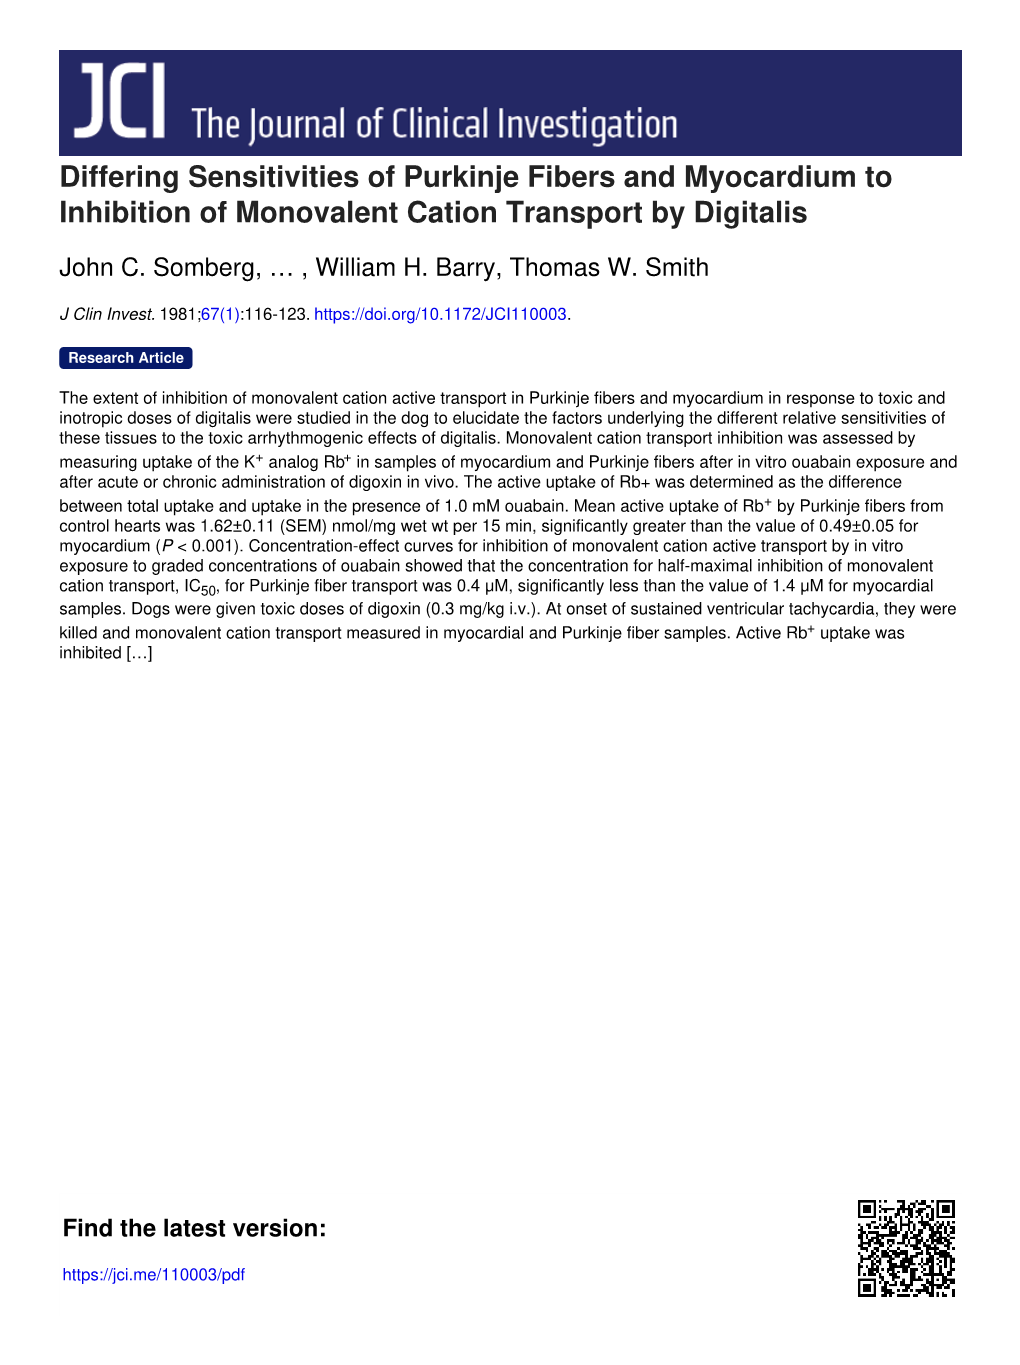 Differing Sensitivities of Purkinje Fibers and Myocardium to Inhibition of Monovalent Cation Transport by Digitalis